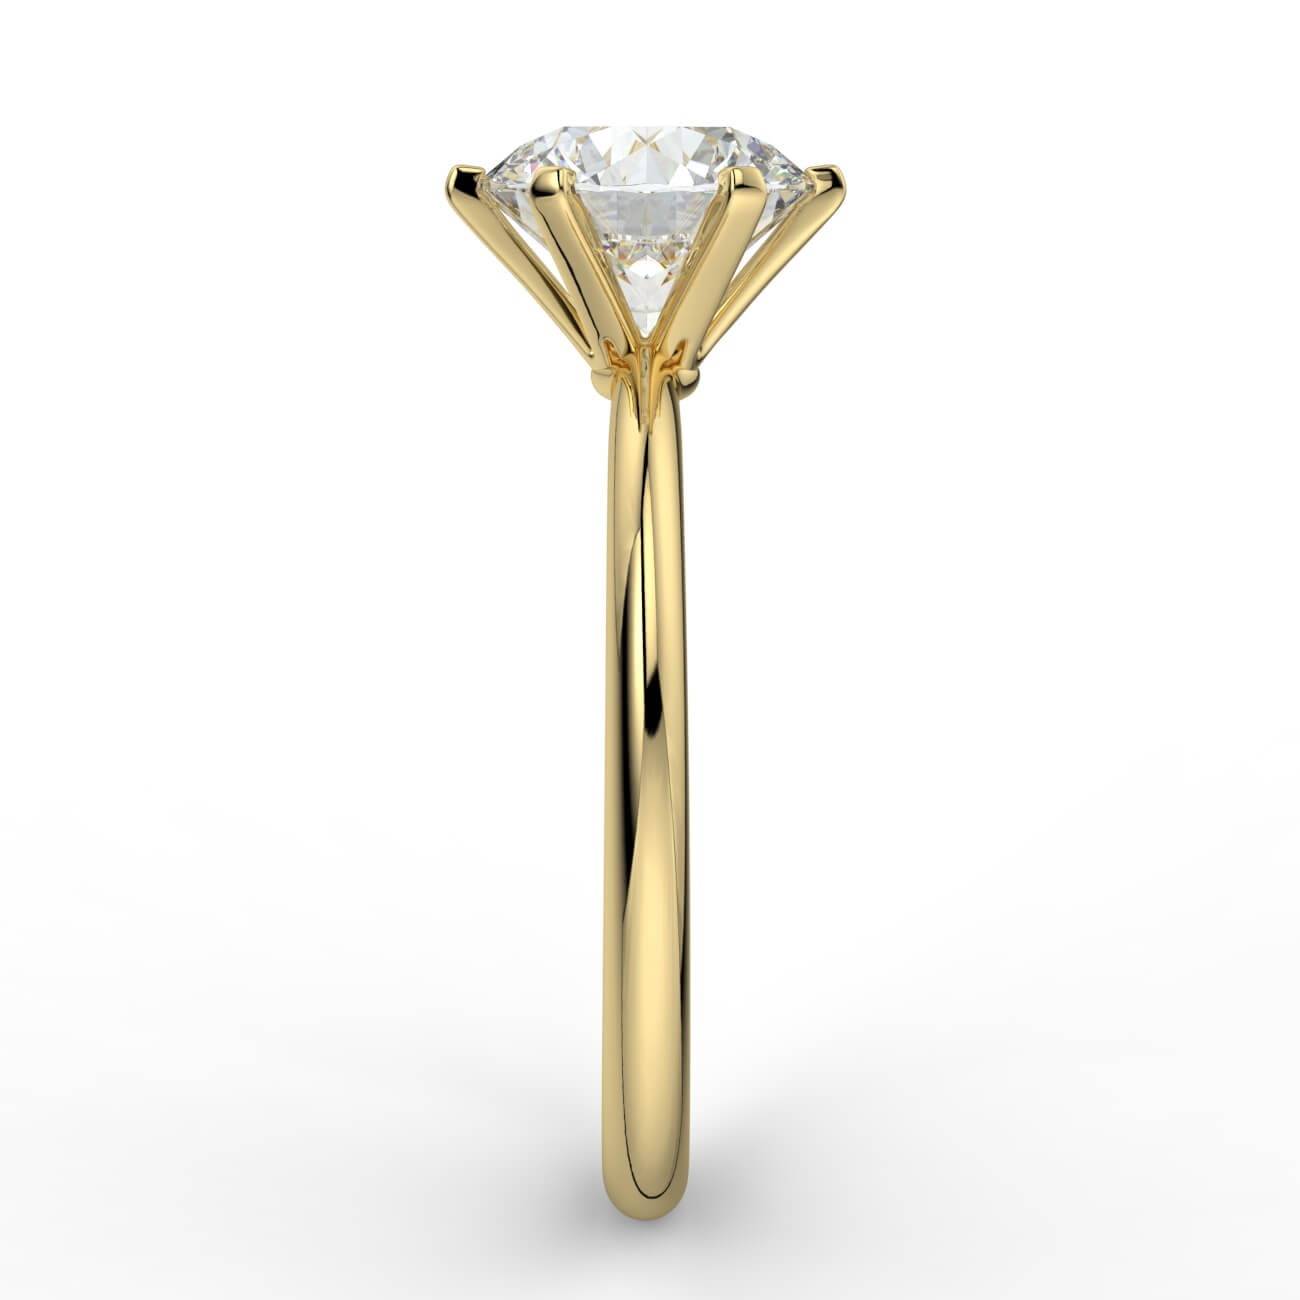 Knife-edge solitaire diamond engagement ring in yellow gold – Australian Diamond Network